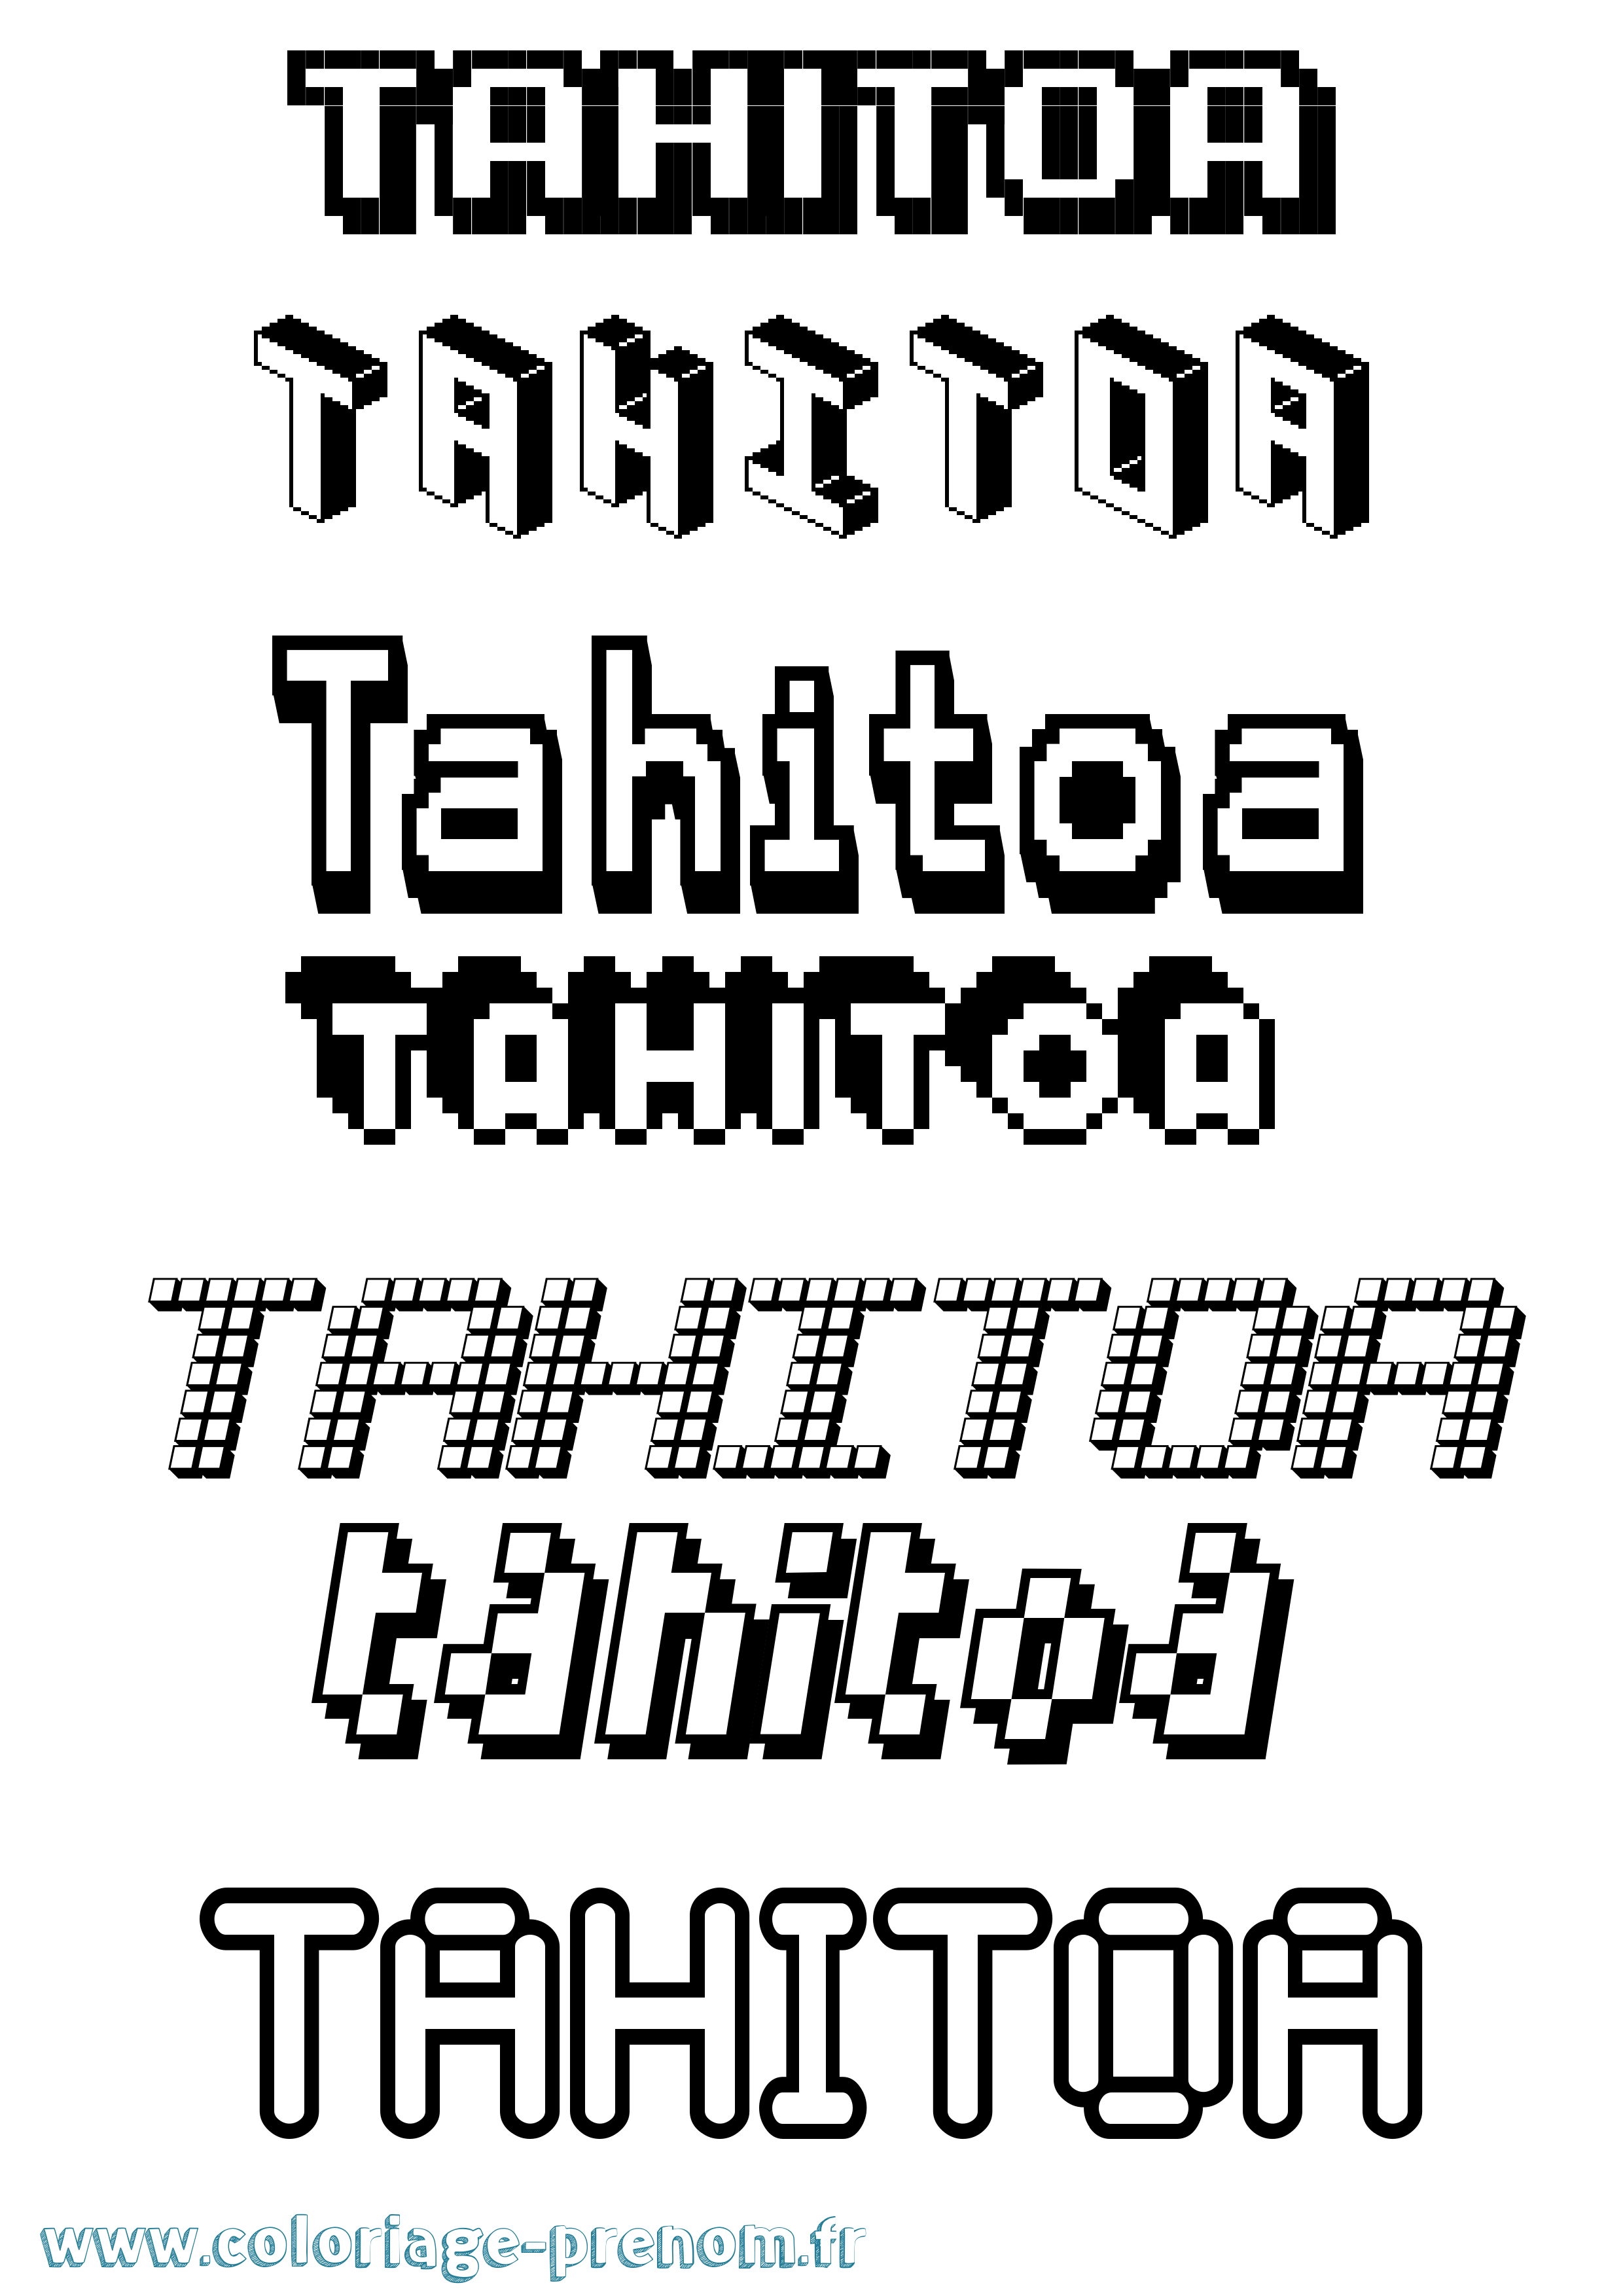 Coloriage prénom Tahitoa Pixel